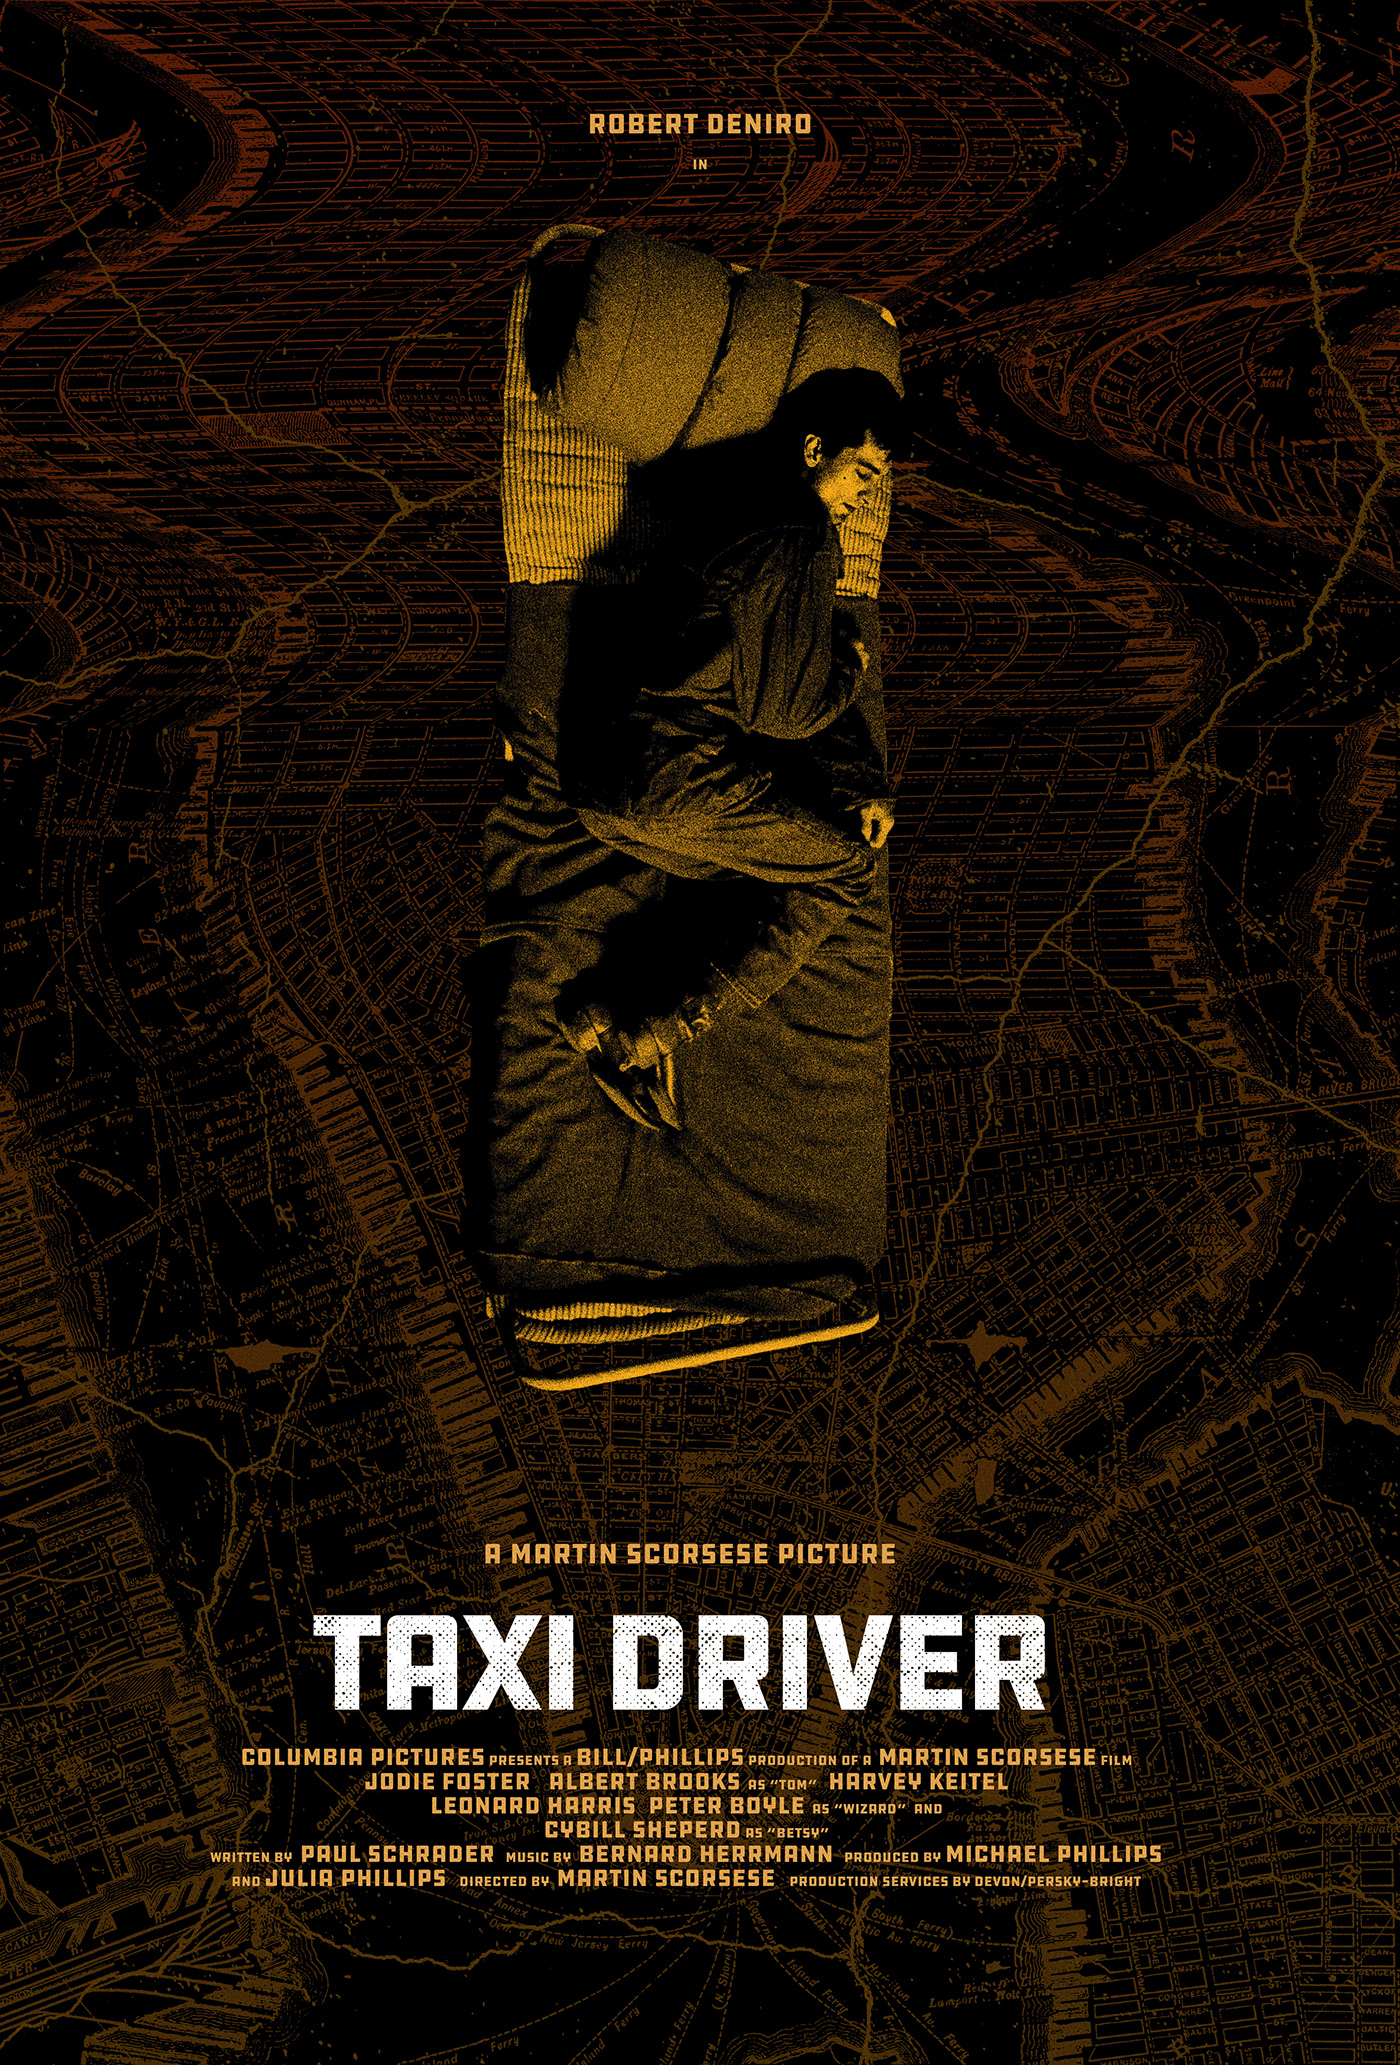 alternative DENIRO driver Film   Martin movie poster robert scorsese taxi